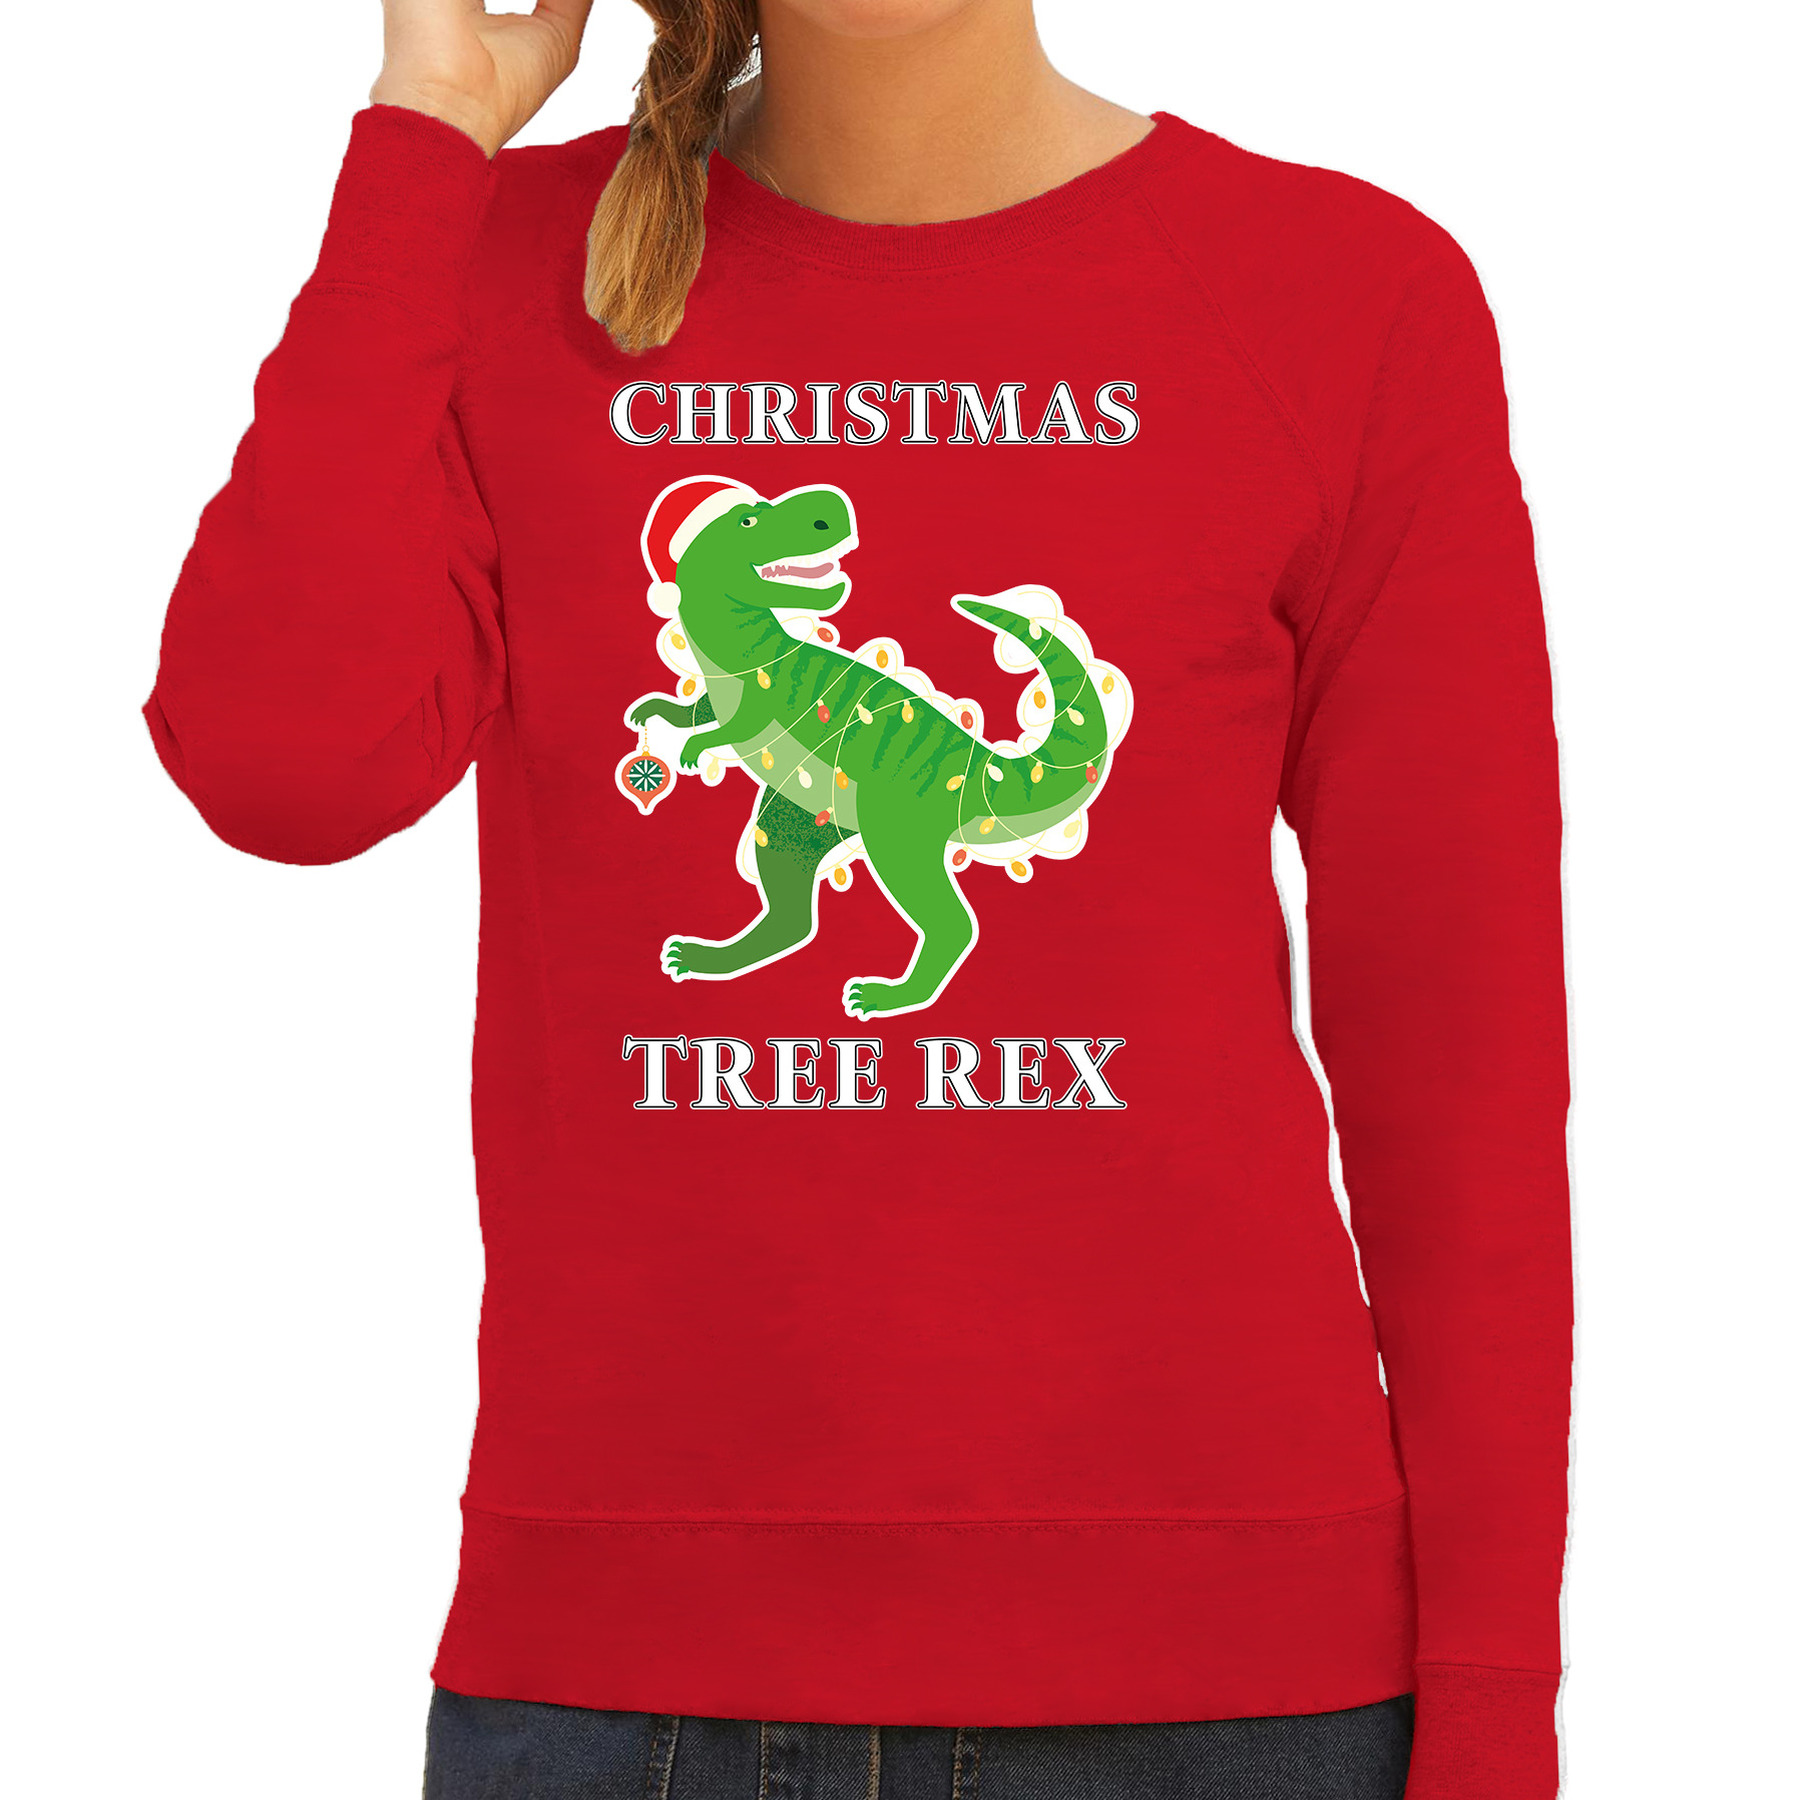 Rode Kersttrui-Kerstkleding Christmas tree rex voor dames